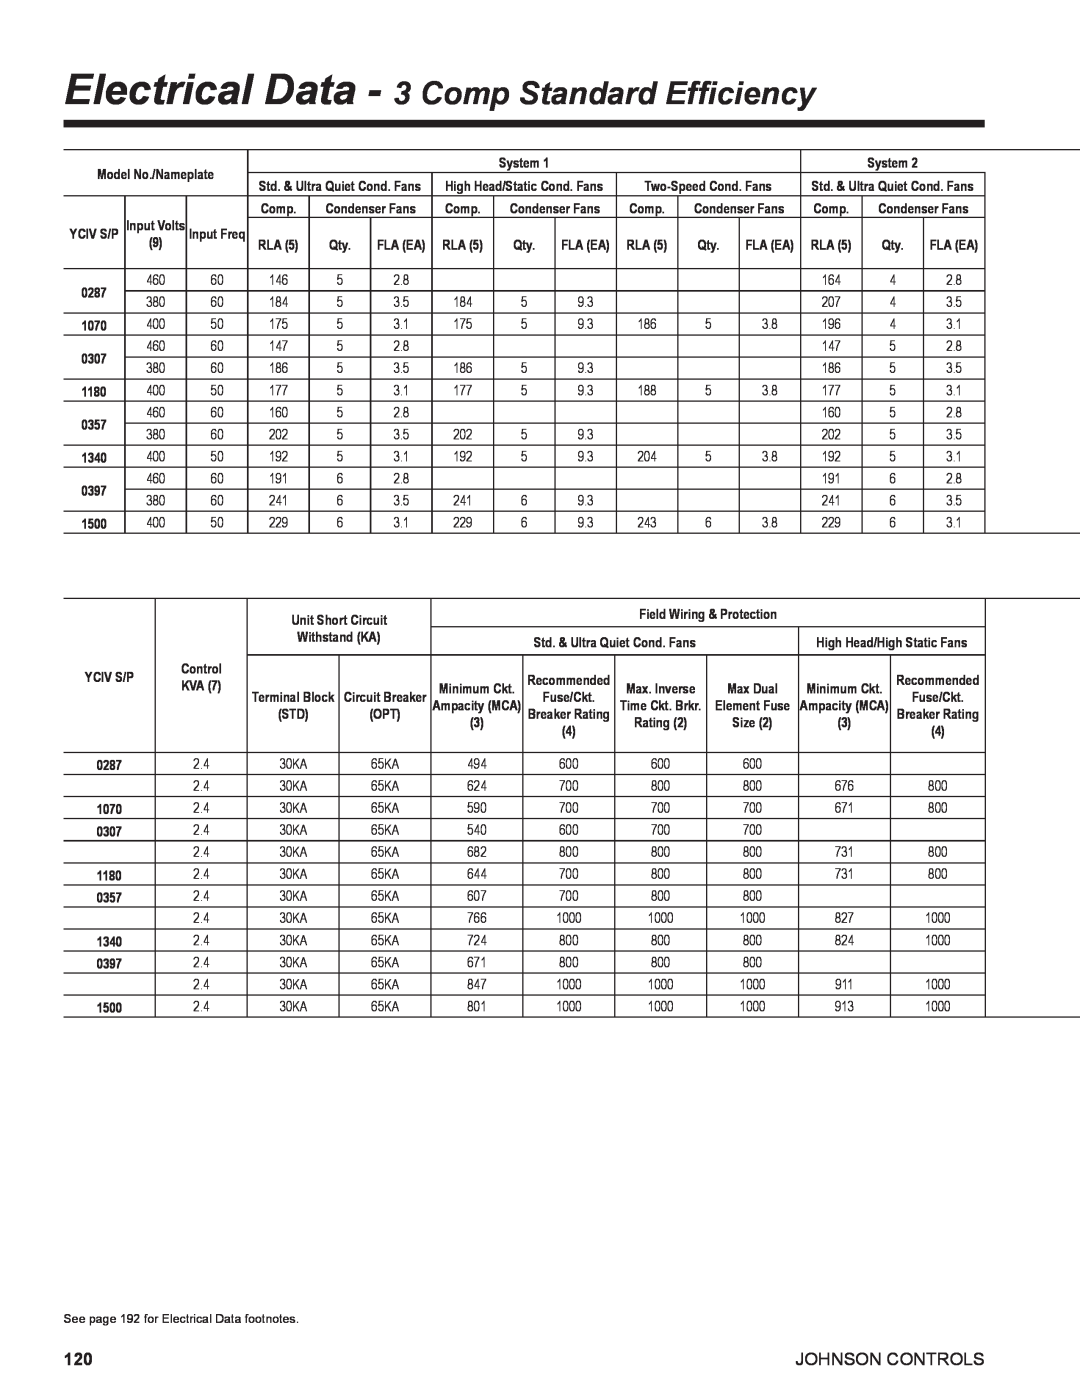 York R134A manual Electrical Data - 3 Comp Standard Efficiency, Johnson Controls 